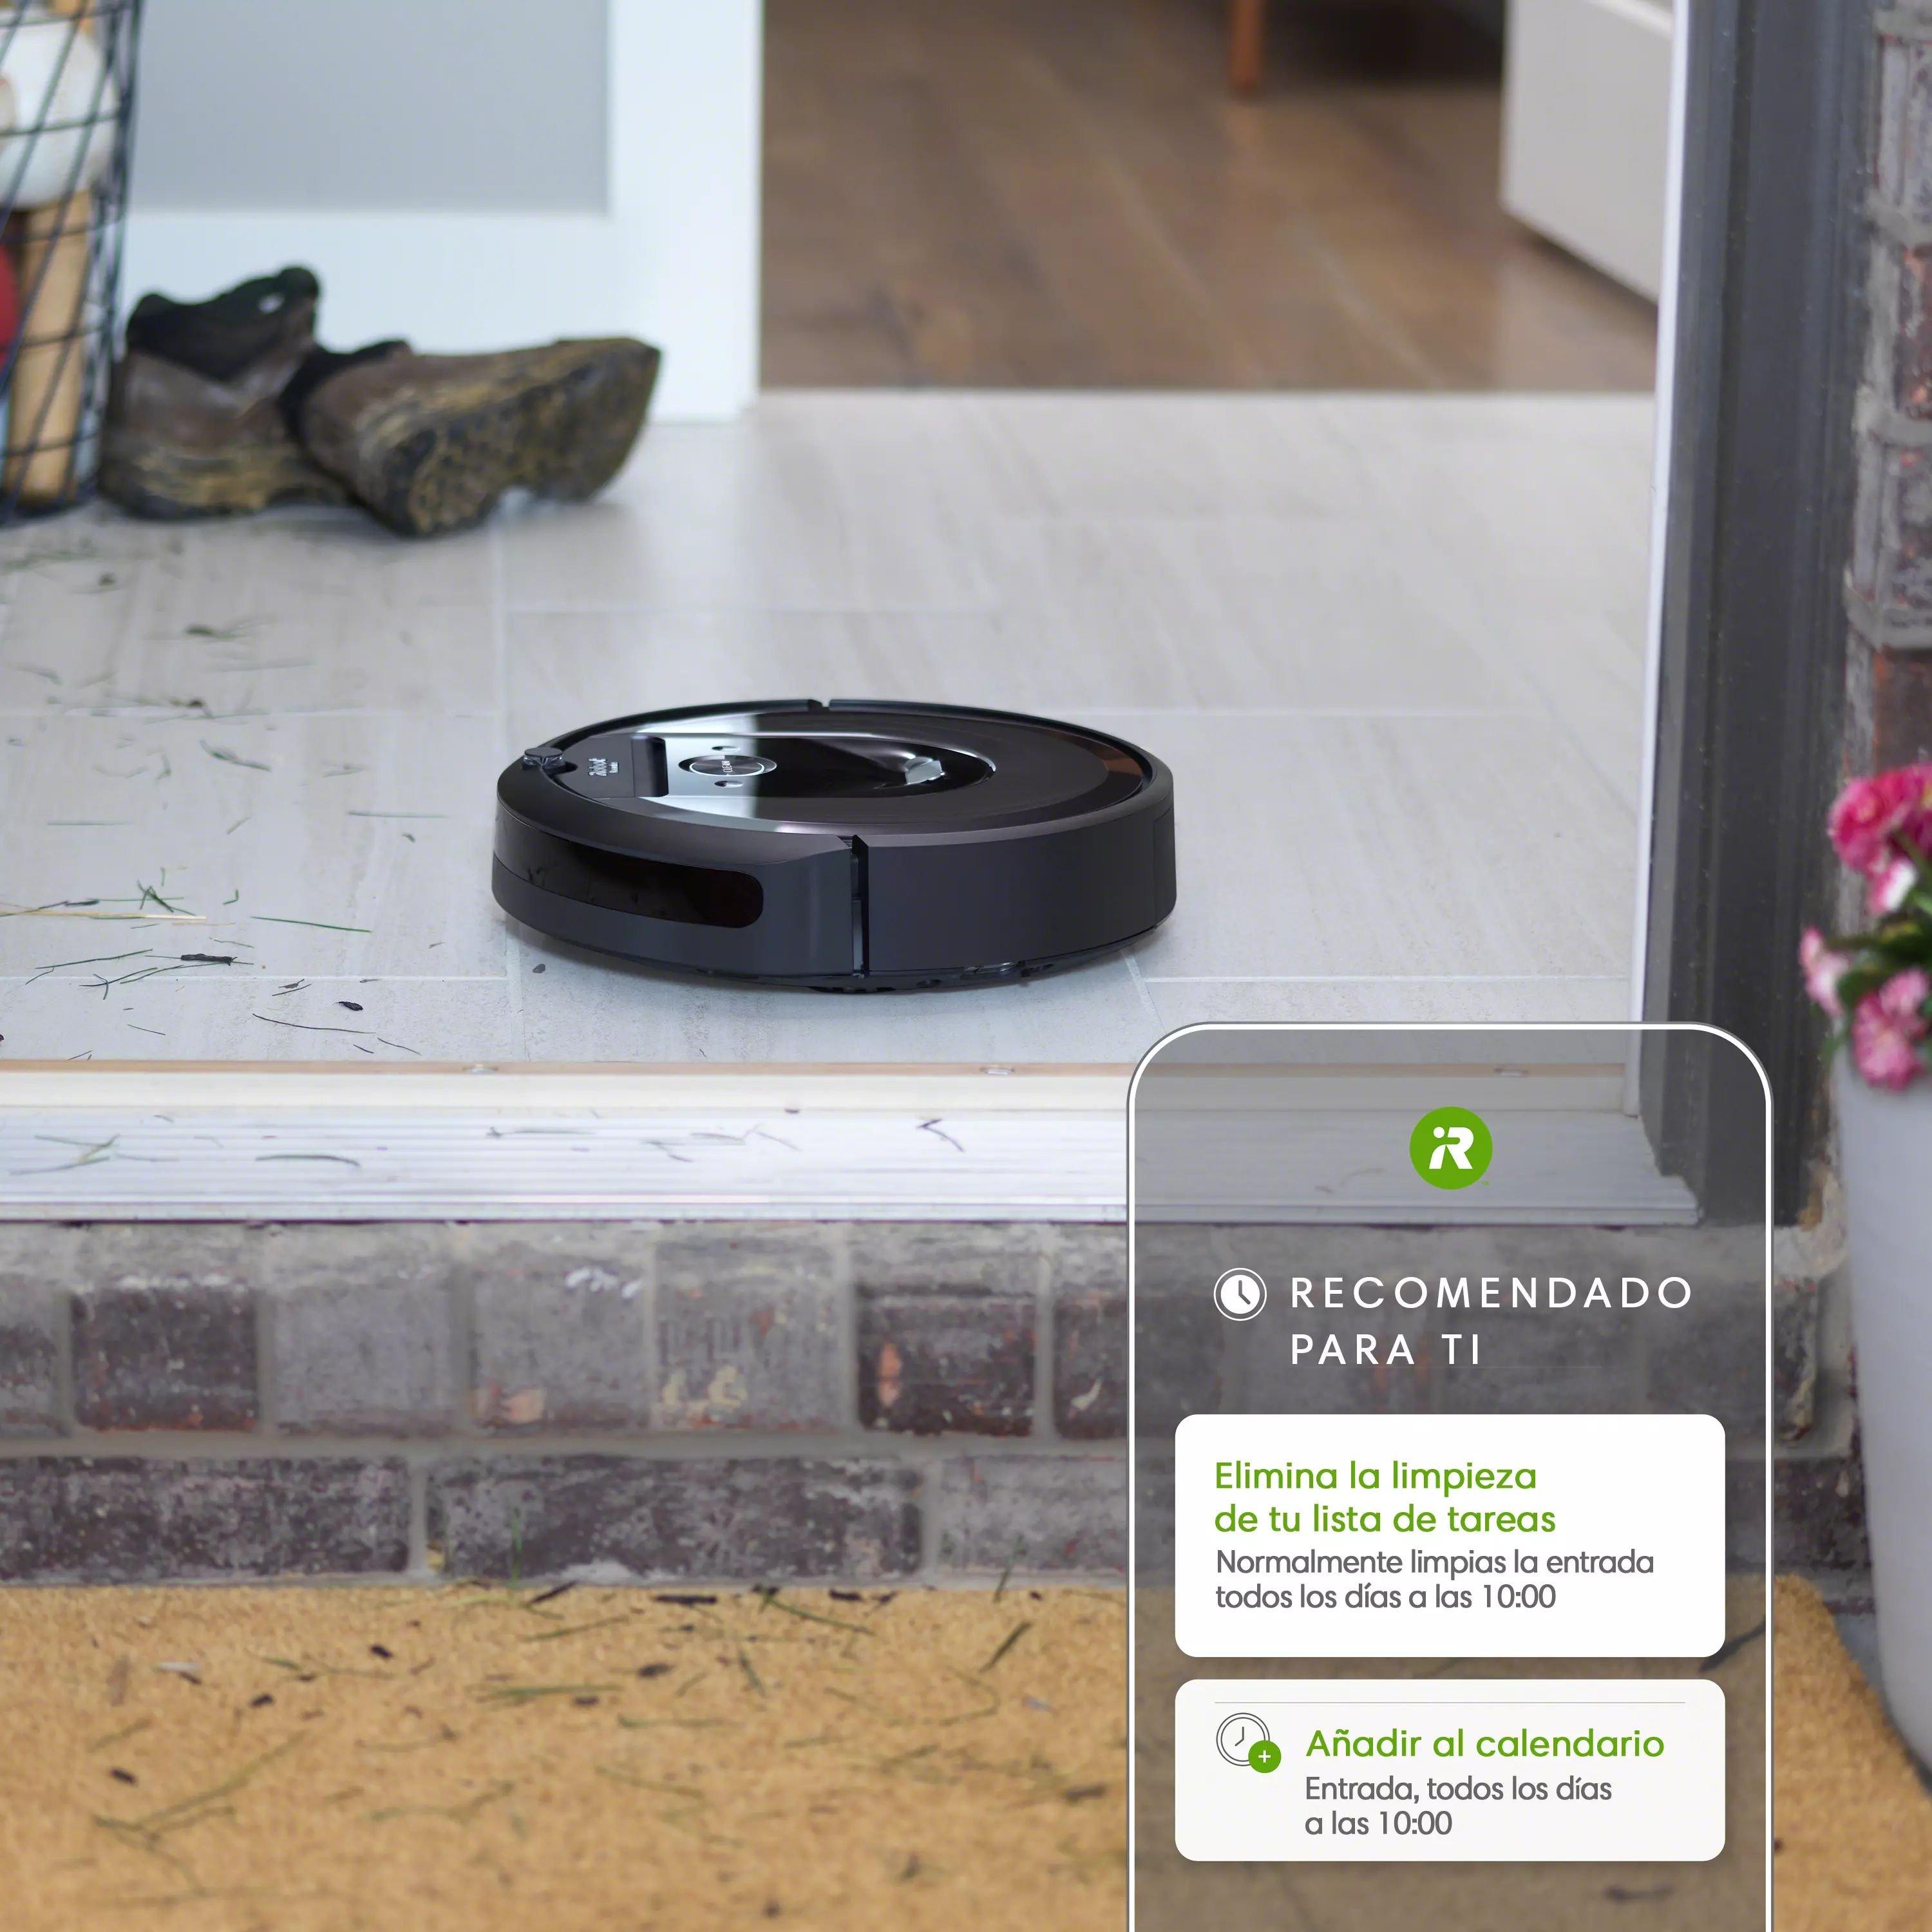  iRobot Roomba i7+ (7550) Robot aspiradora con eliminación  automática de suciedad, se vacía por sí misma, conexión Wi-Fi, mapeo  inteligente, compatible con Alexa, ideal para pelo de mascotas, alfombras,  suelos duros